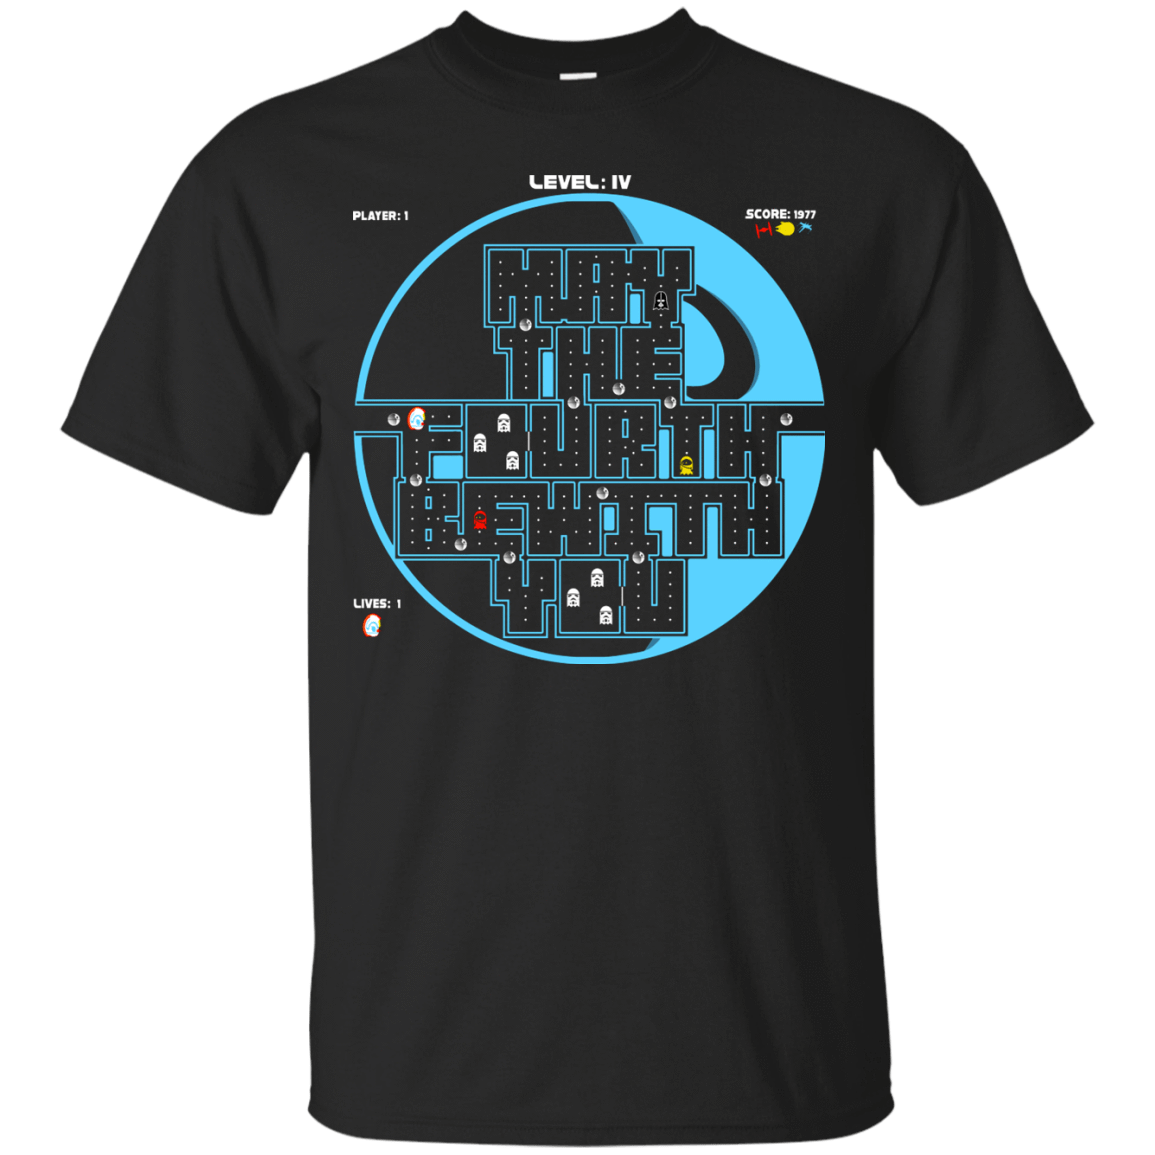 T-Shirts Black / S Pacman May The Fourth T-Shirt